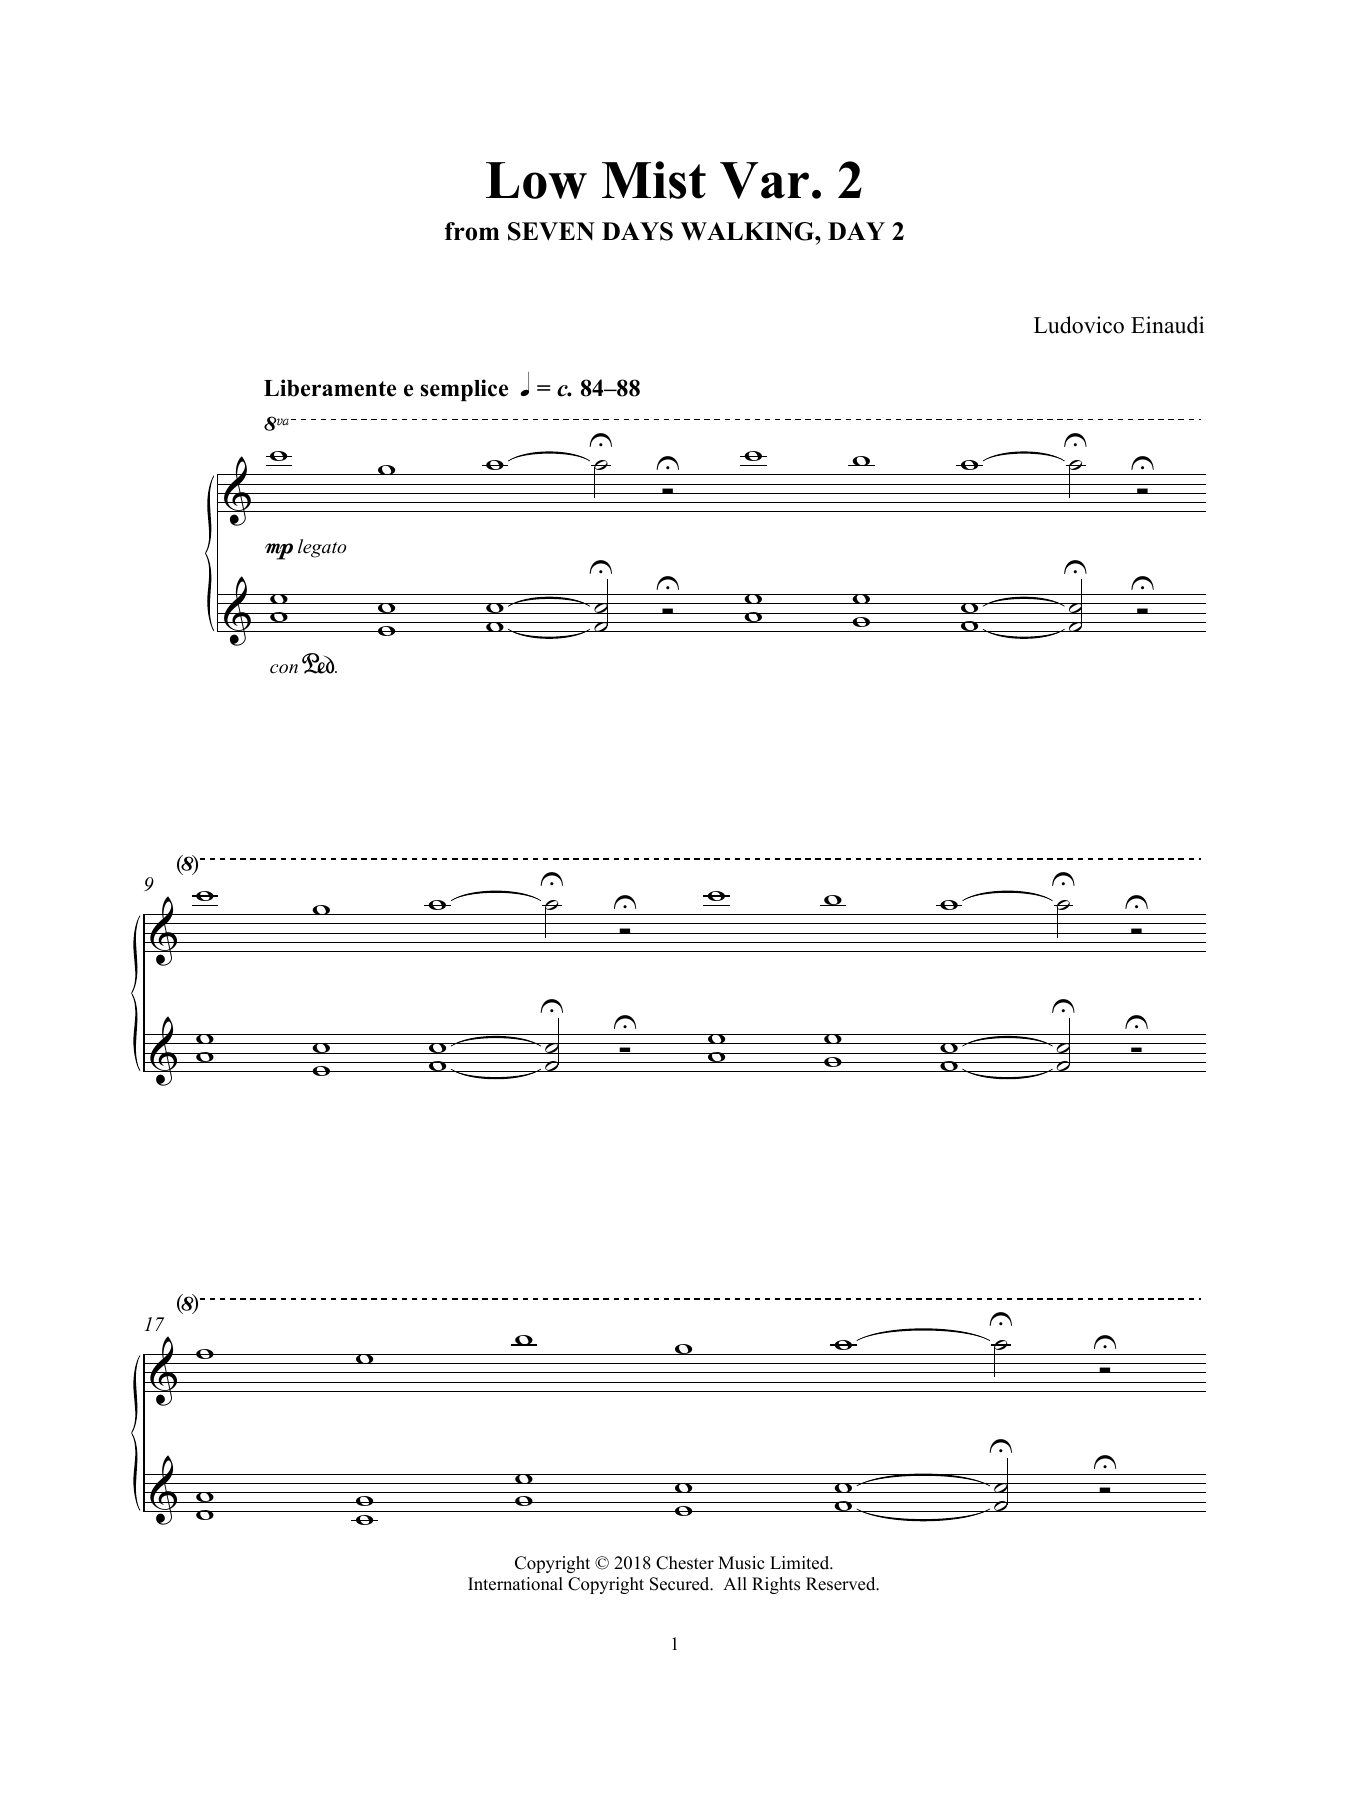 Download Ludovico Einaudi Low Mist Var. 2 (from Seven Days Walkin Sheet Music